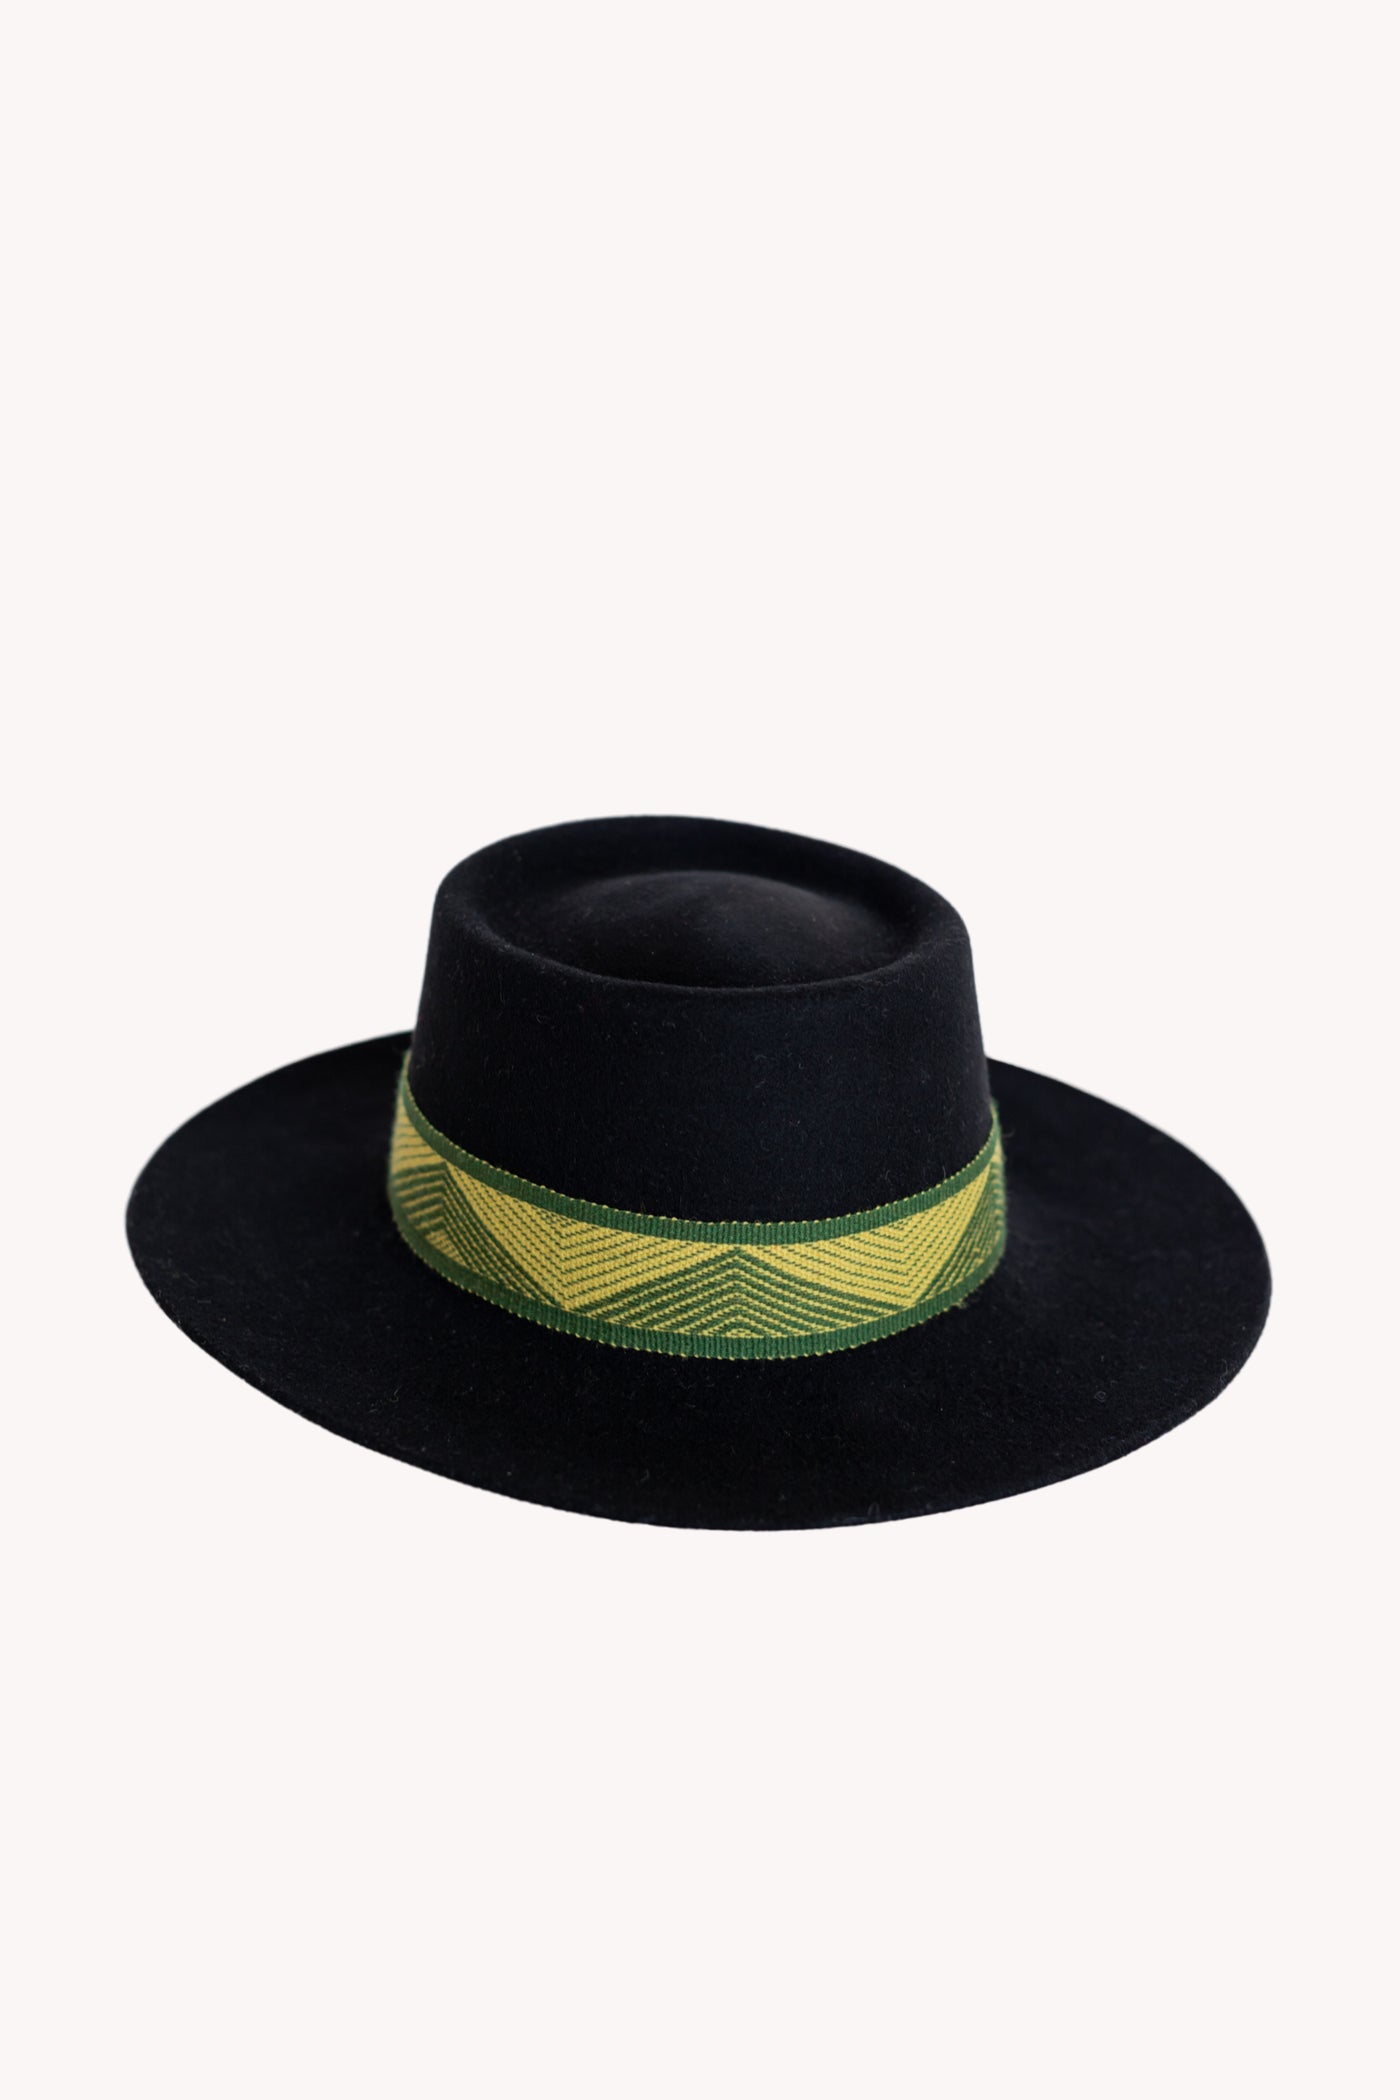 Black Bucket style alpaca wool peruvian hat